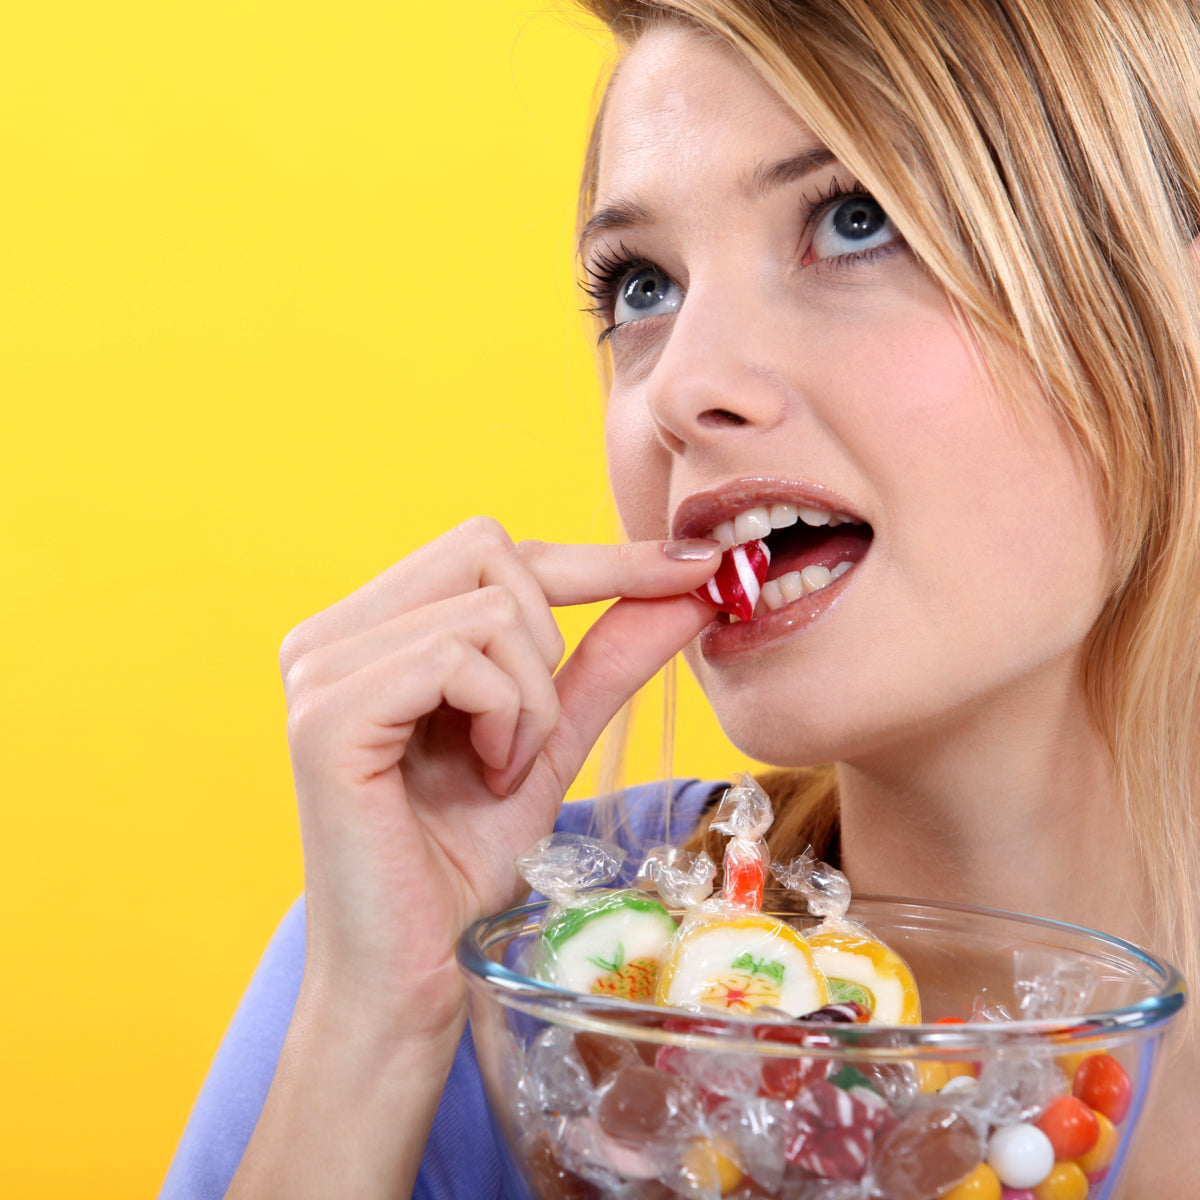 Diet info for Brach's Hard Candy - Cinnamon - Sugar Free - Spoonful